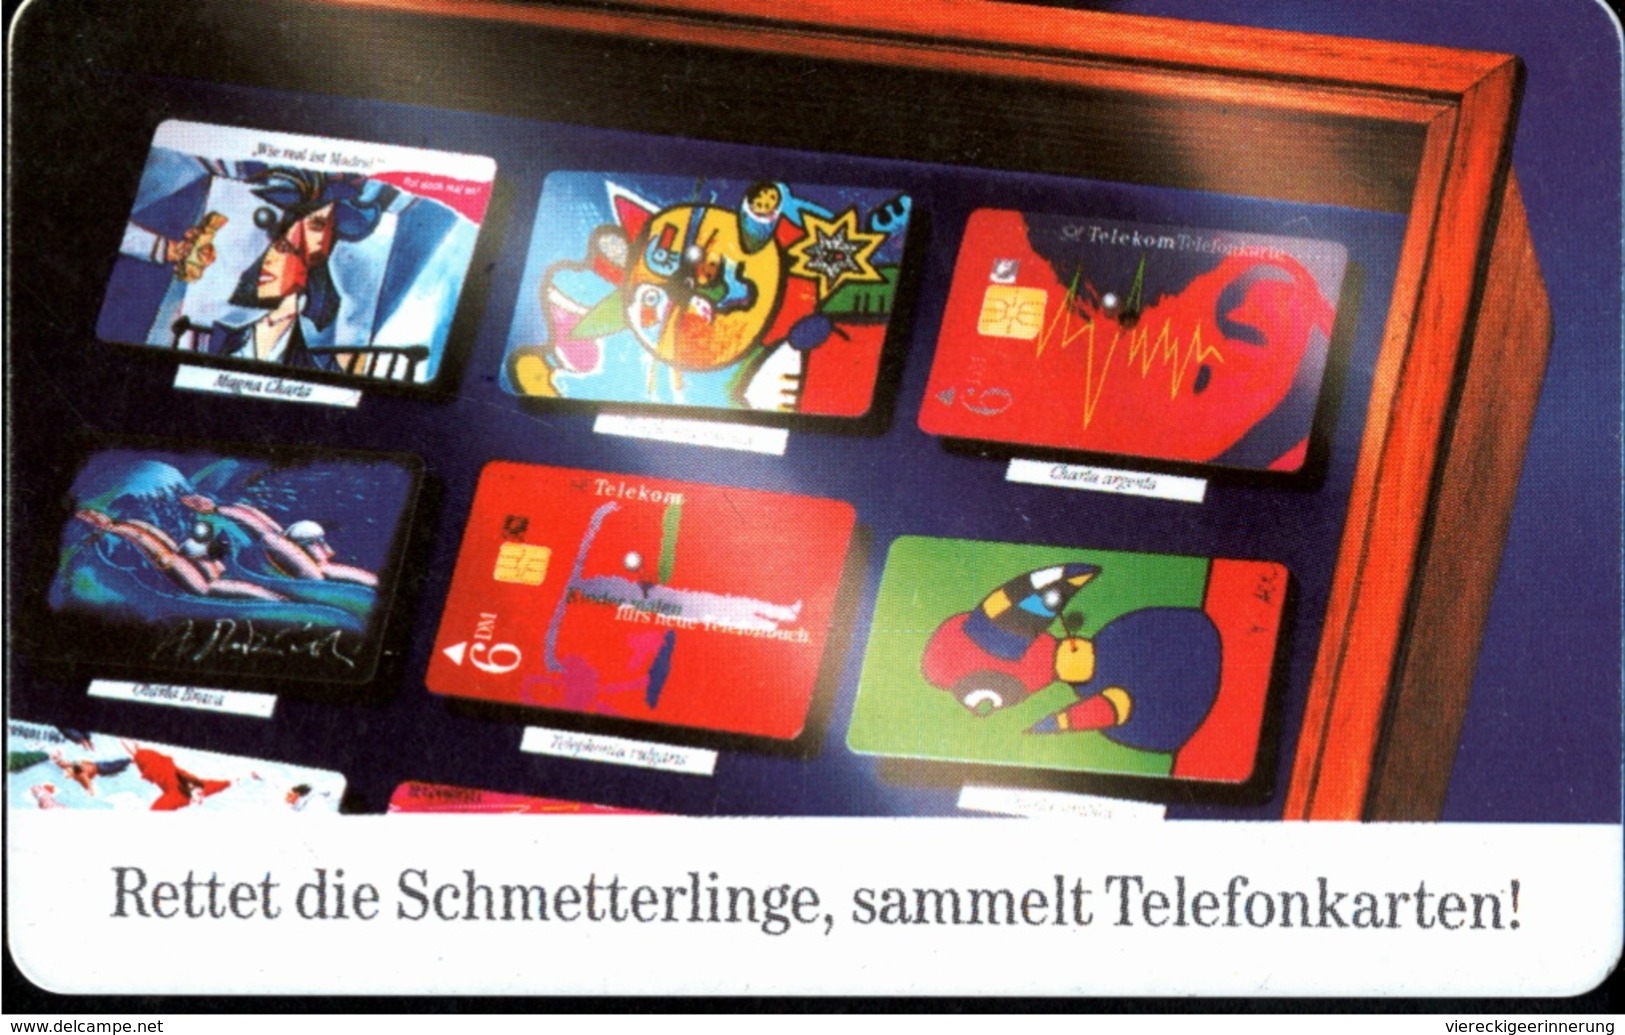 ! Telefonkarte, Telecarte, Phonecard, 1996, S PD, Sammelt Telefonkarten, Schmetterlinge, Germany - P & PD-Series: Schalterkarten Der Dt. Telekom